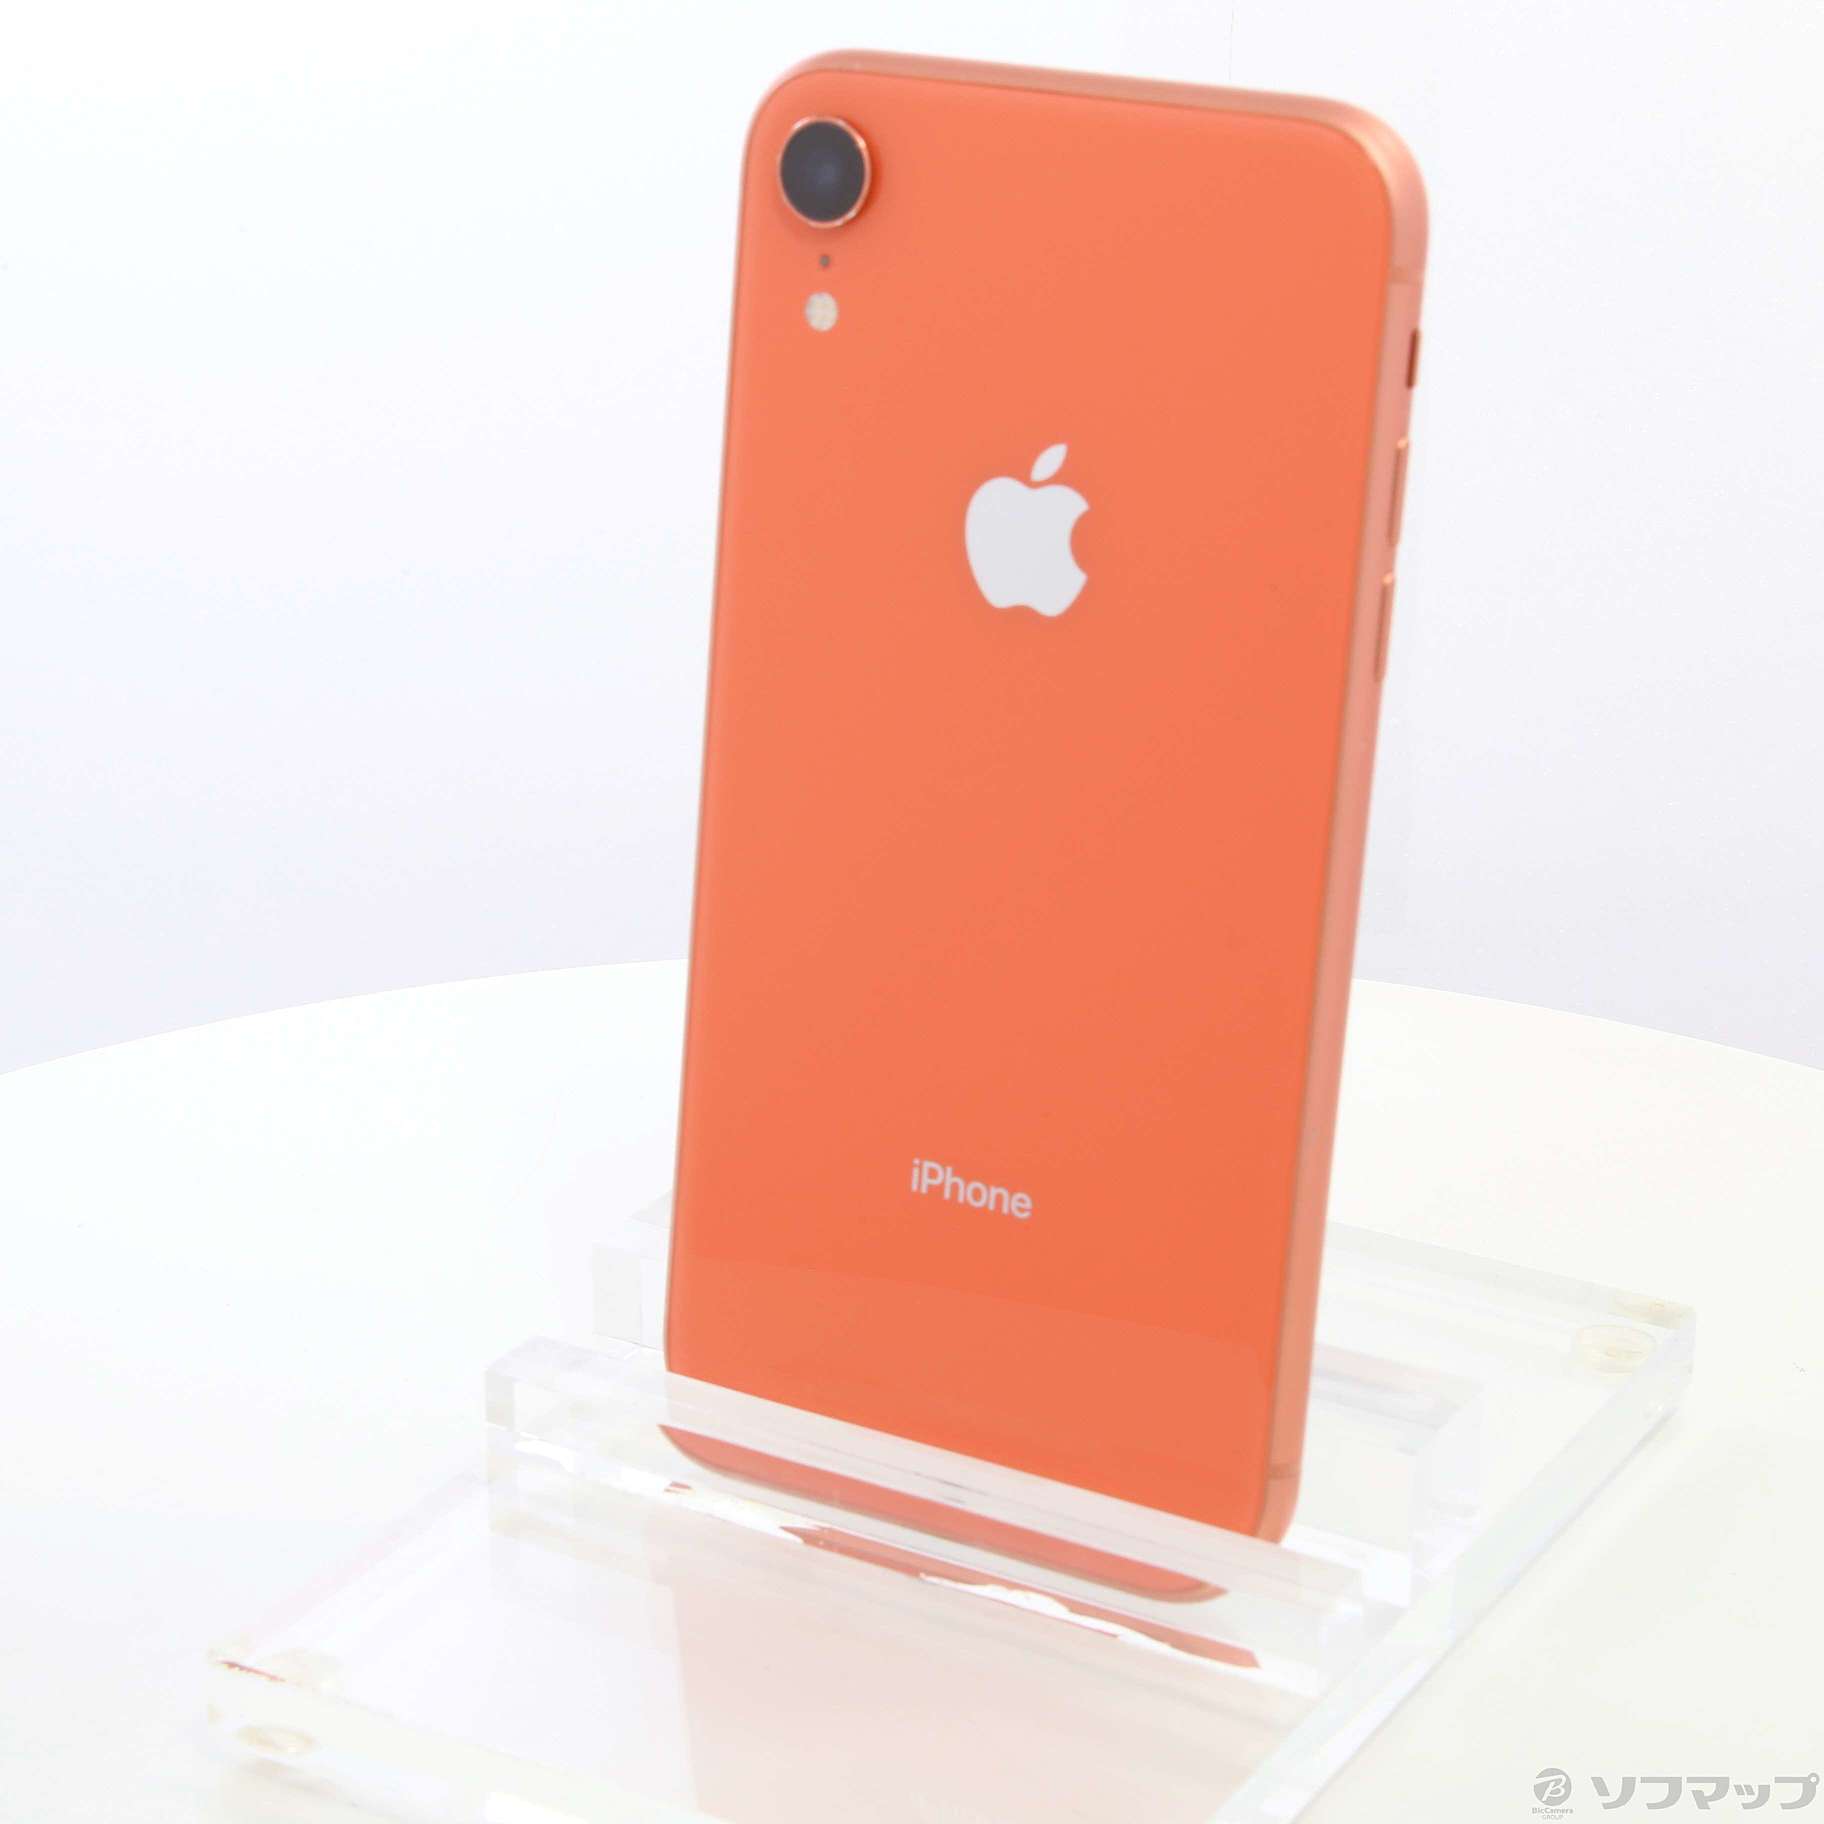 iPhone XR 64GB【ちょい安価格設定】 新品ほぼ未使用品